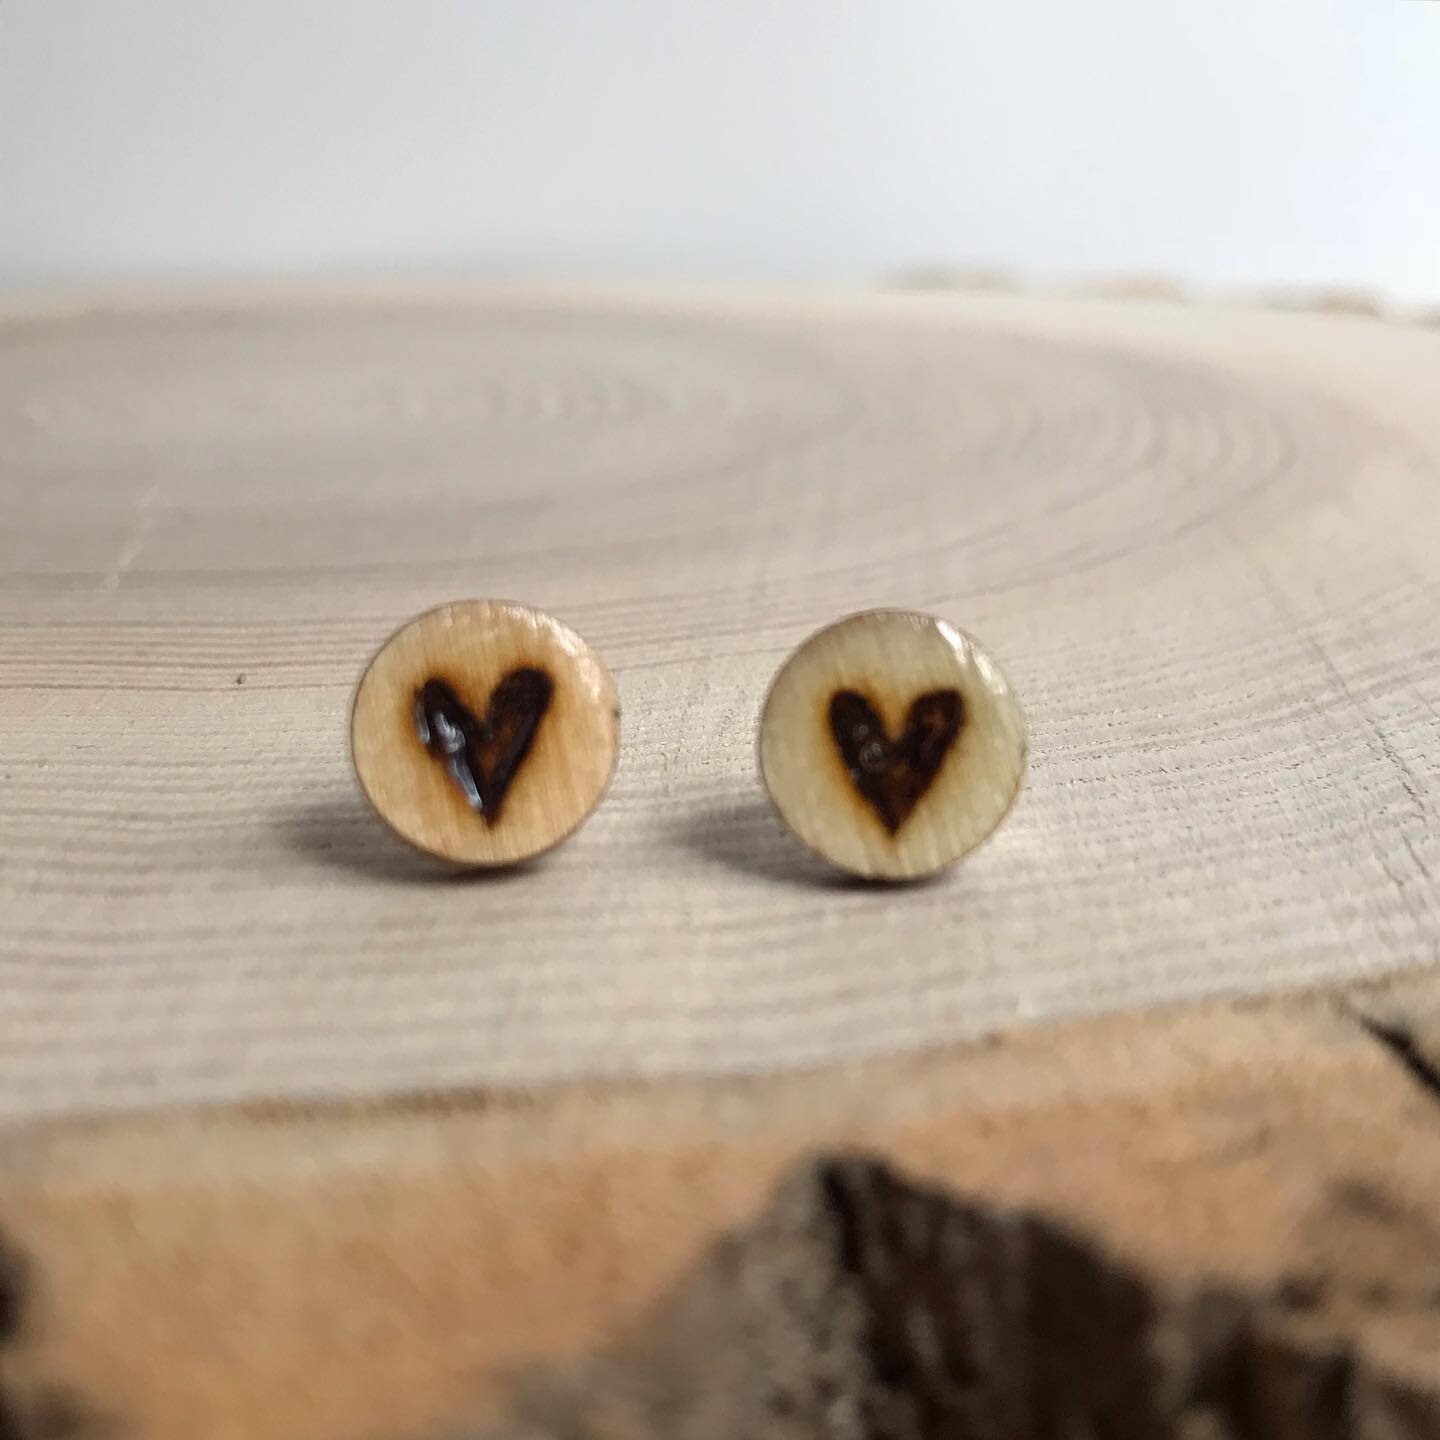 💗 Tiny Wood Stud Earrings 💛⠀
Handmade + One of a Kind. Nickel free. ⠀
⠀
⠀
⠀
🌞🌞🌞⠀
#pyrography #pyrographyartists #woodburning #pyro #pyrographer #artist #artistsoninstagram #ottawaartist #canadianartist #canadianmaker #ottawaart #burnbabyburn #ra